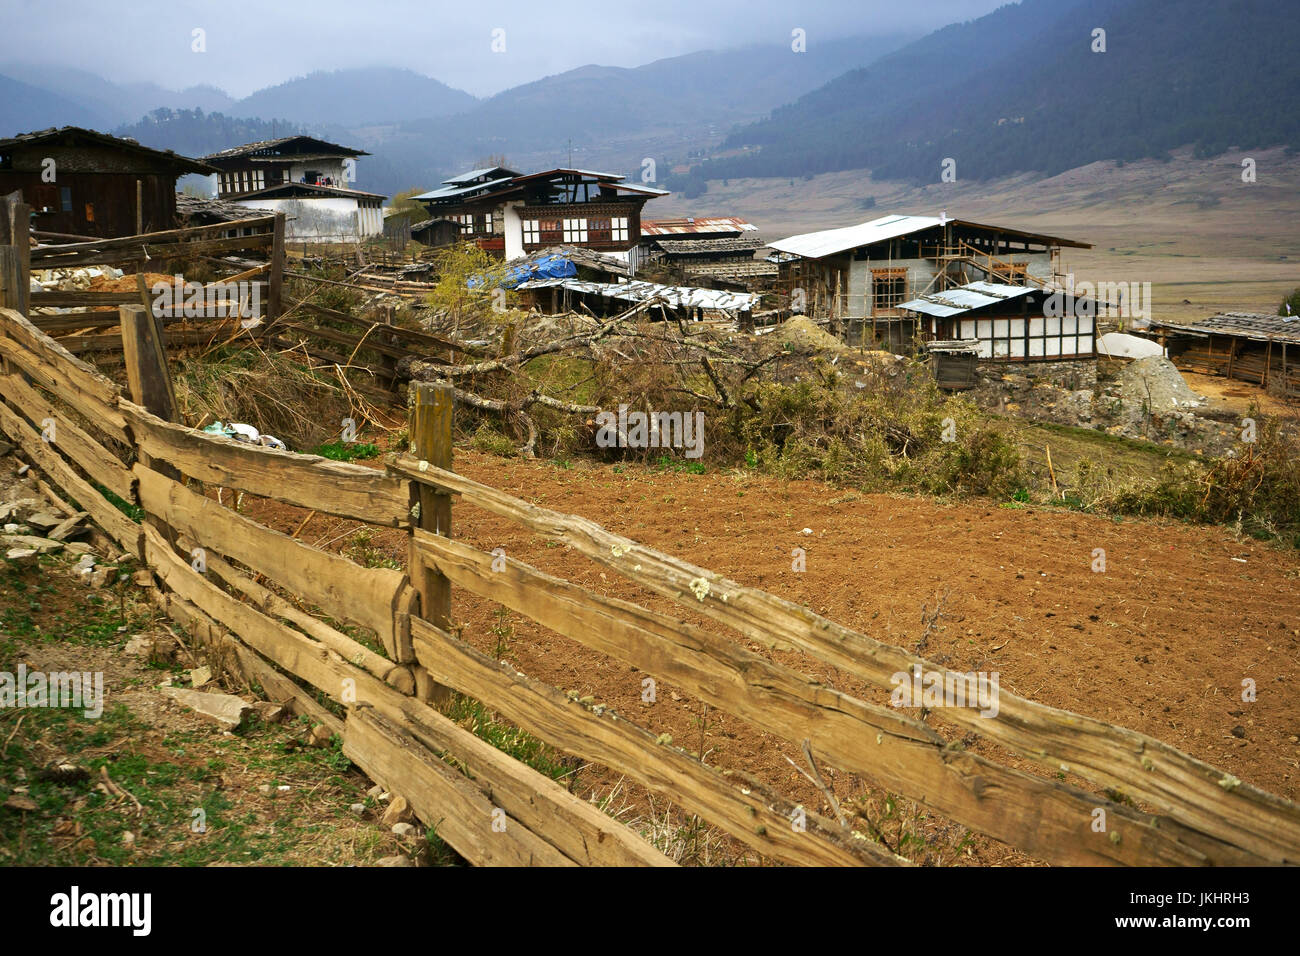 Farmhouses with wooden fences, Phobjikha valley, Bhutan Stock Photo